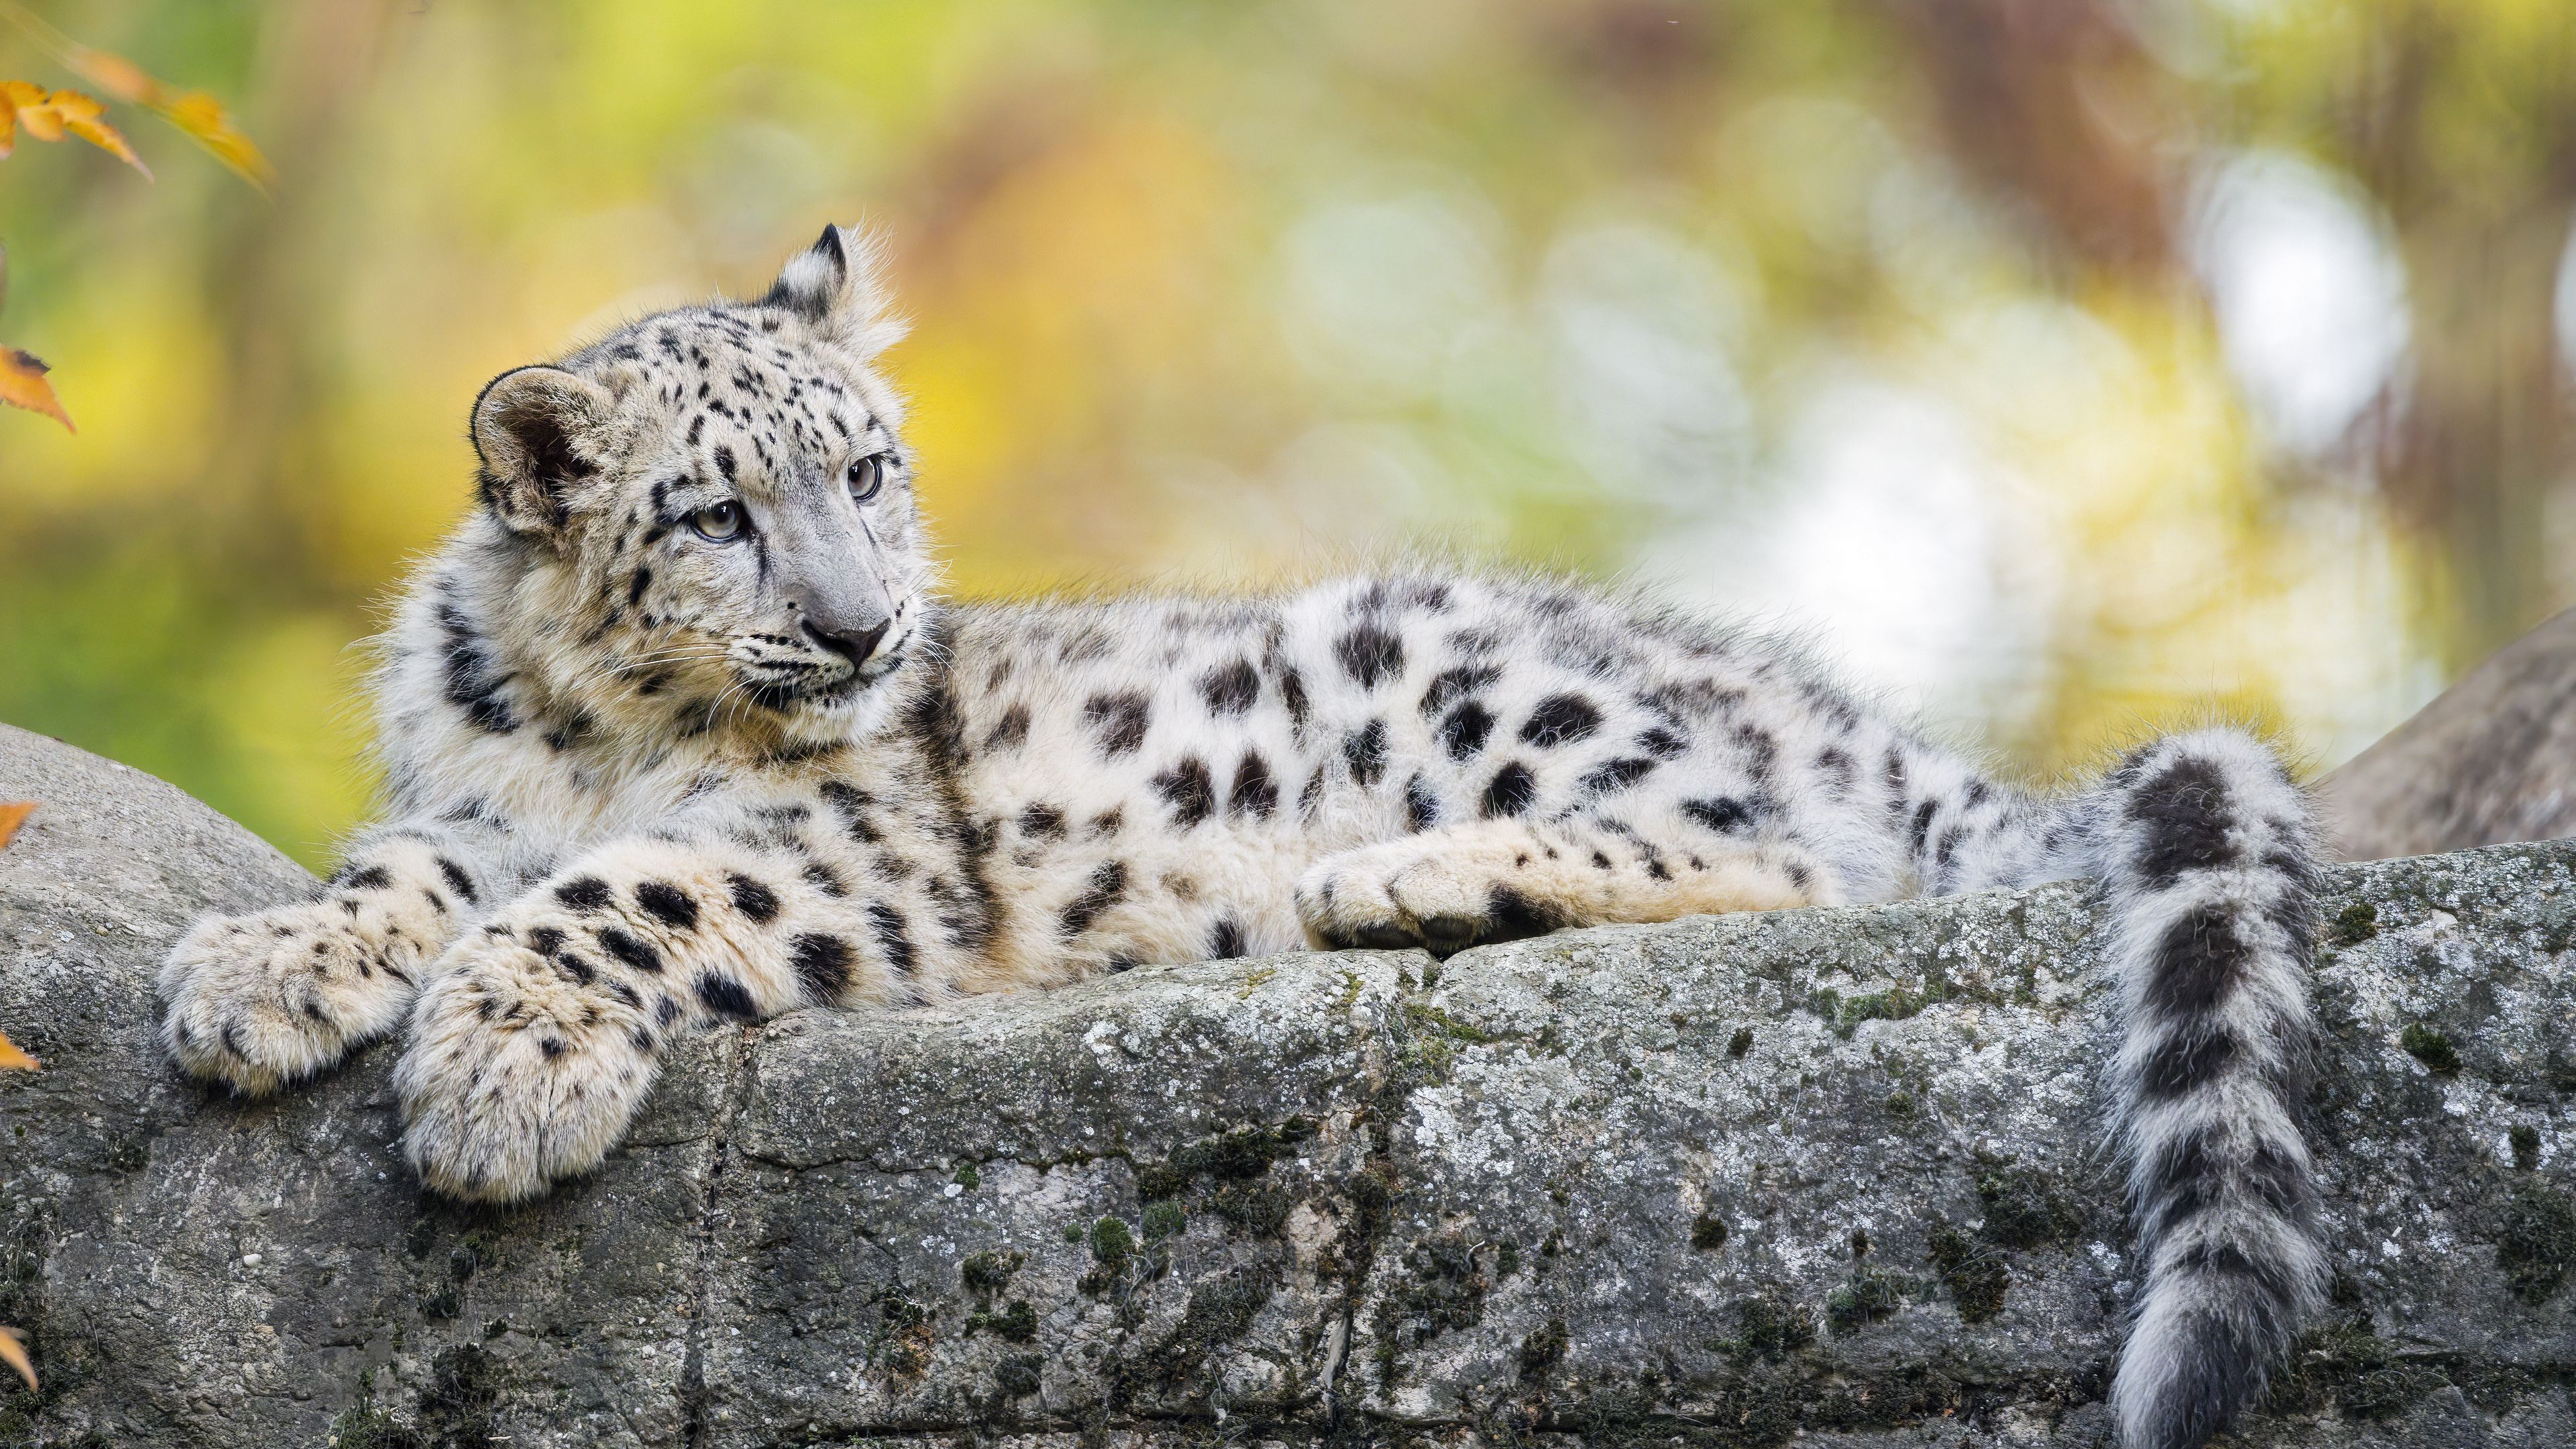 Download wallpaper 3840x2160 snow leopard, kitten, cub, wildlife, animal,  rock, blur 4k uhd 16:9 hd background